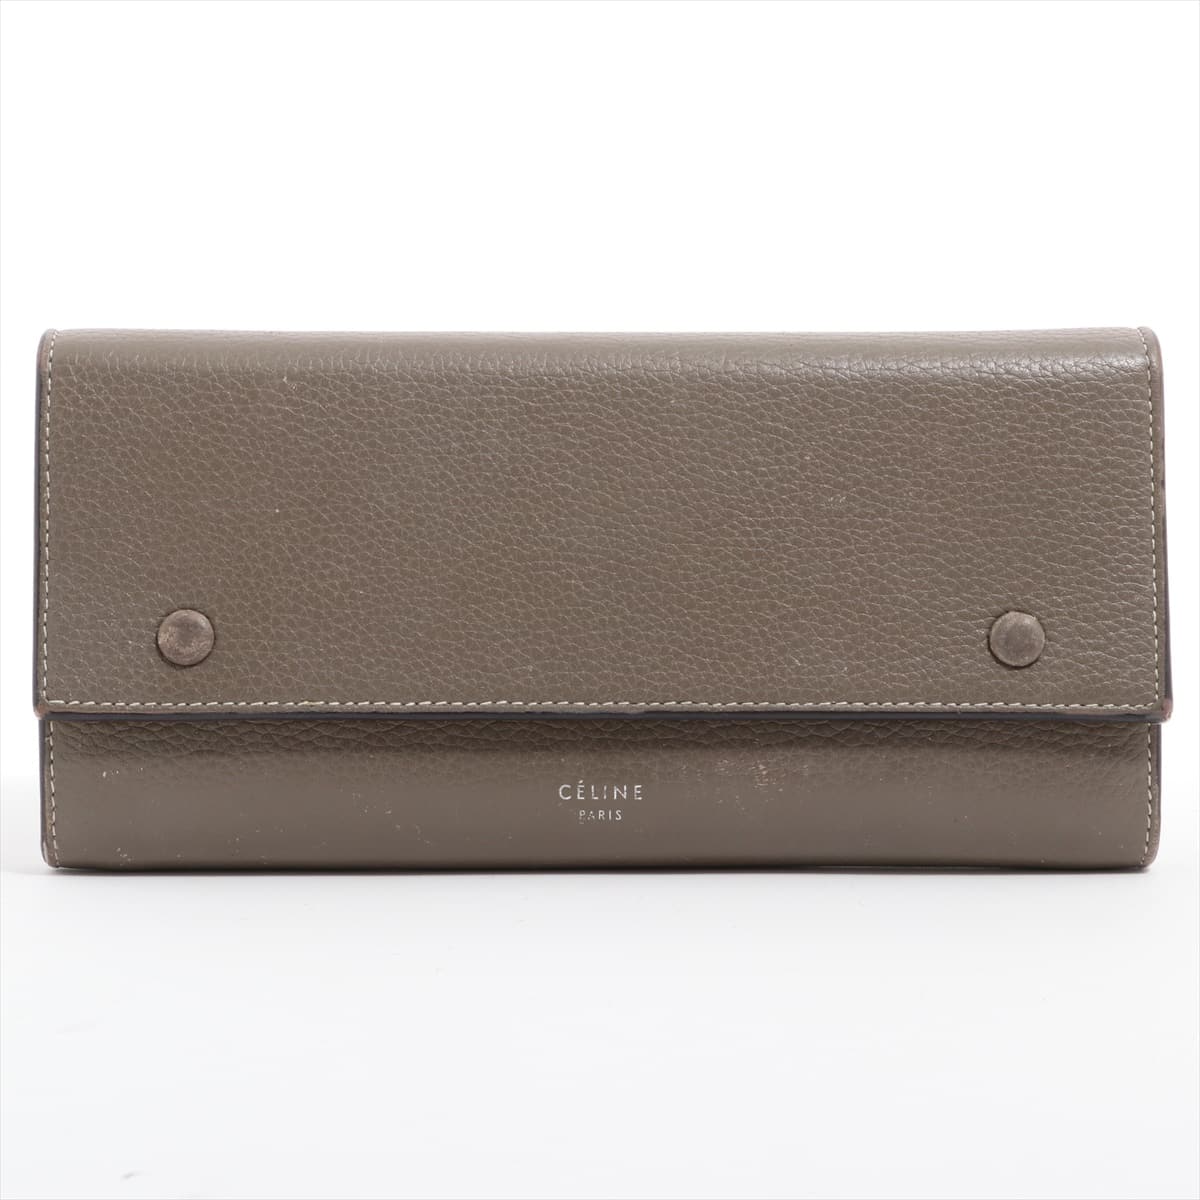 CELINE Large Flap Multi Function Leather Wallet Grey